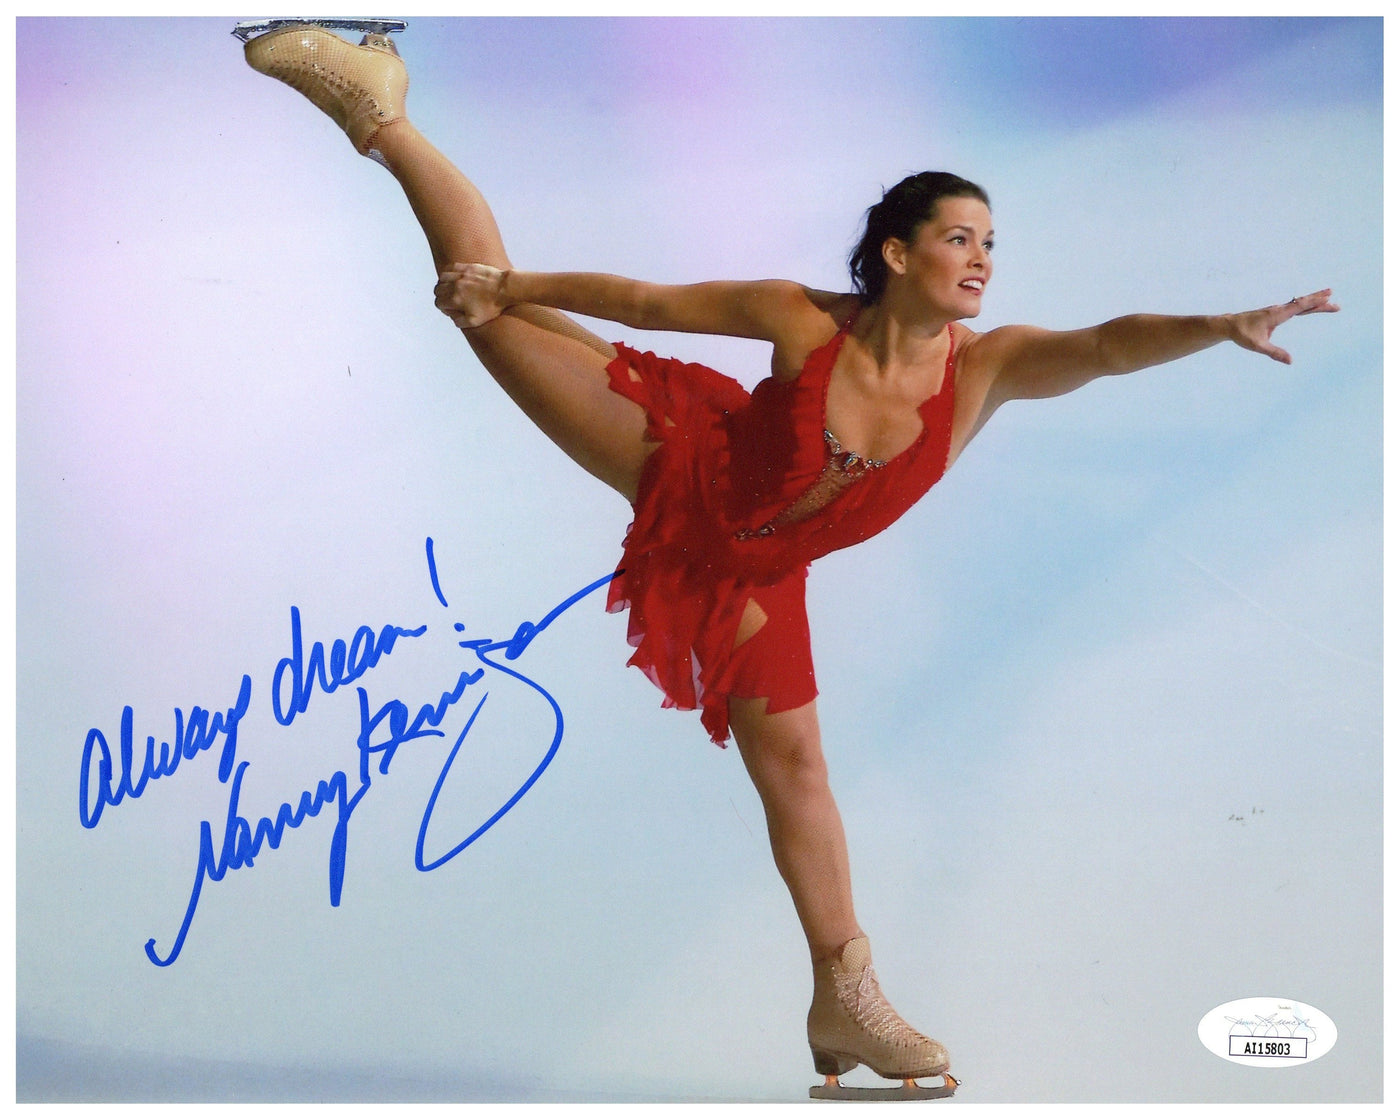 SPECIAL Nancy Kerrigan Signed 8x10 Photo American Figure Skater Autographed JSA COA